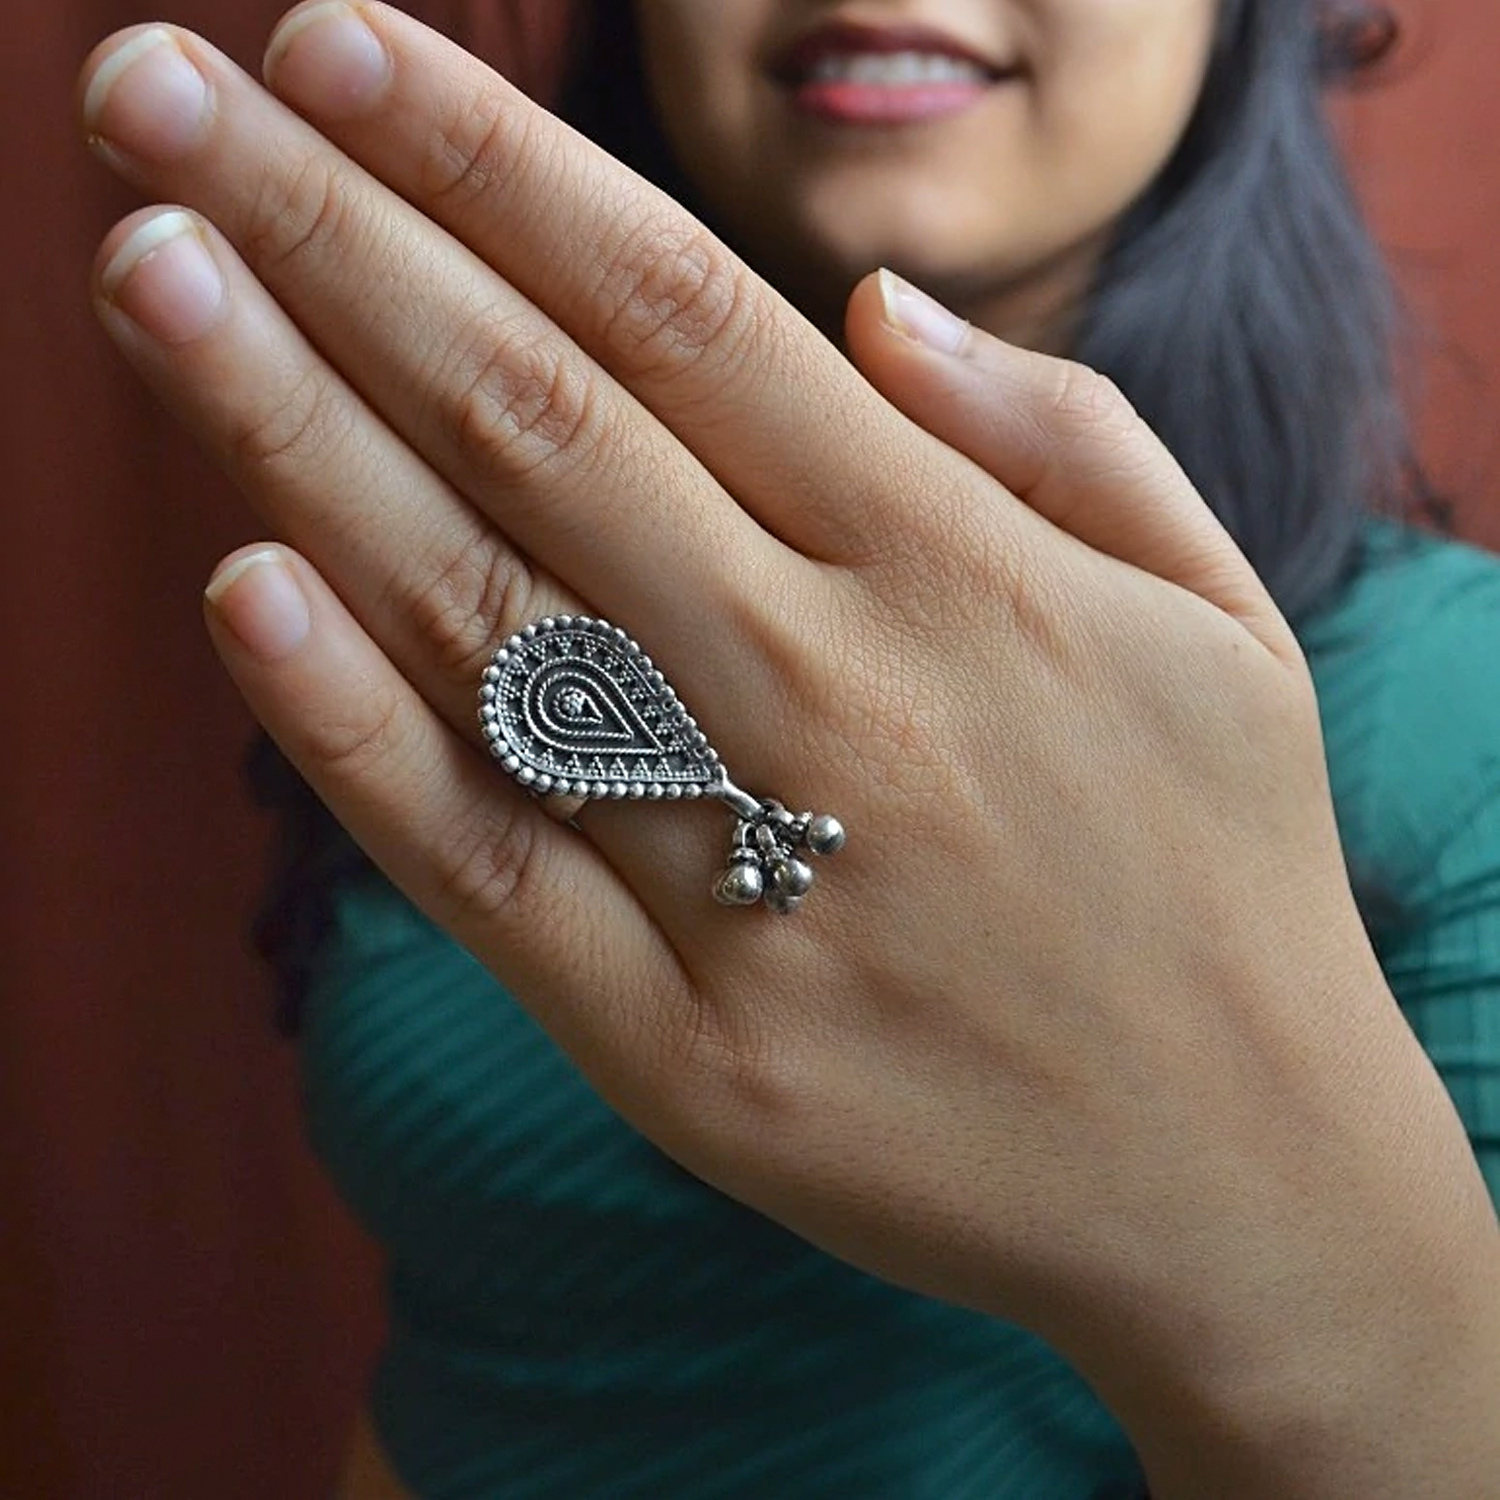 Buy Leaf Design Ruby Silver Ring : Ornate Jewels